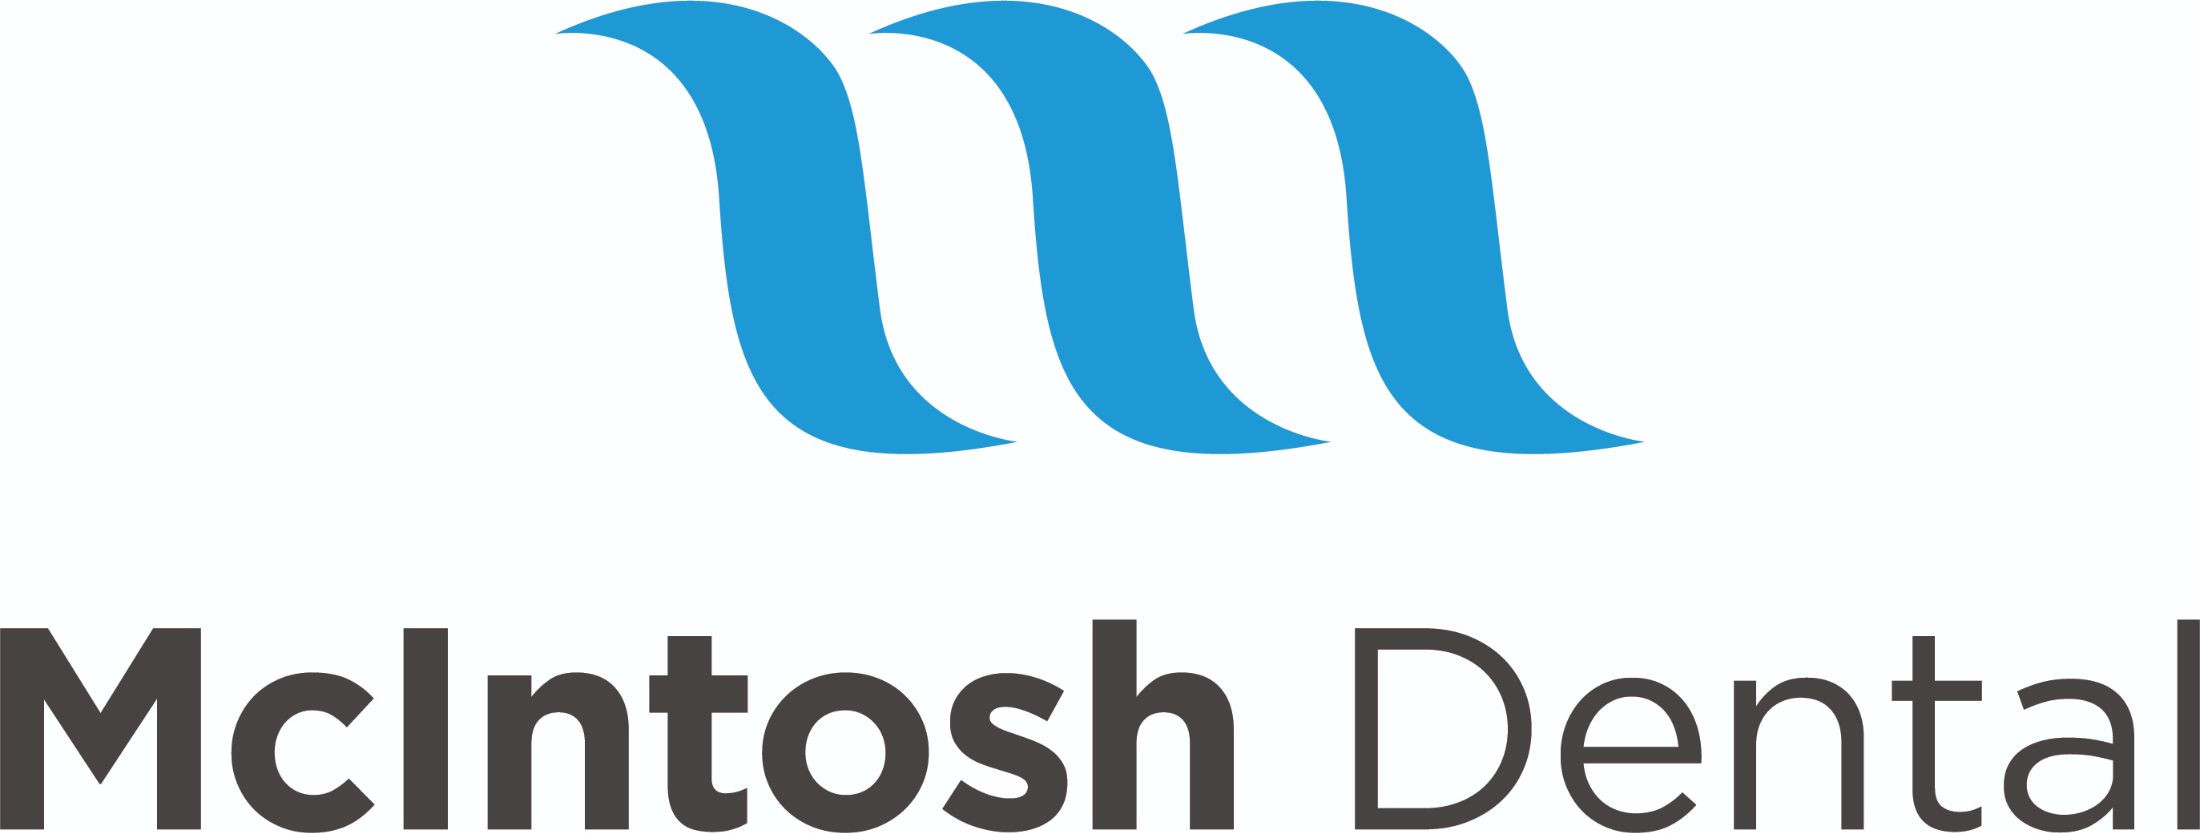 Mcintosh Dental Logo Cmyk (003) (002)